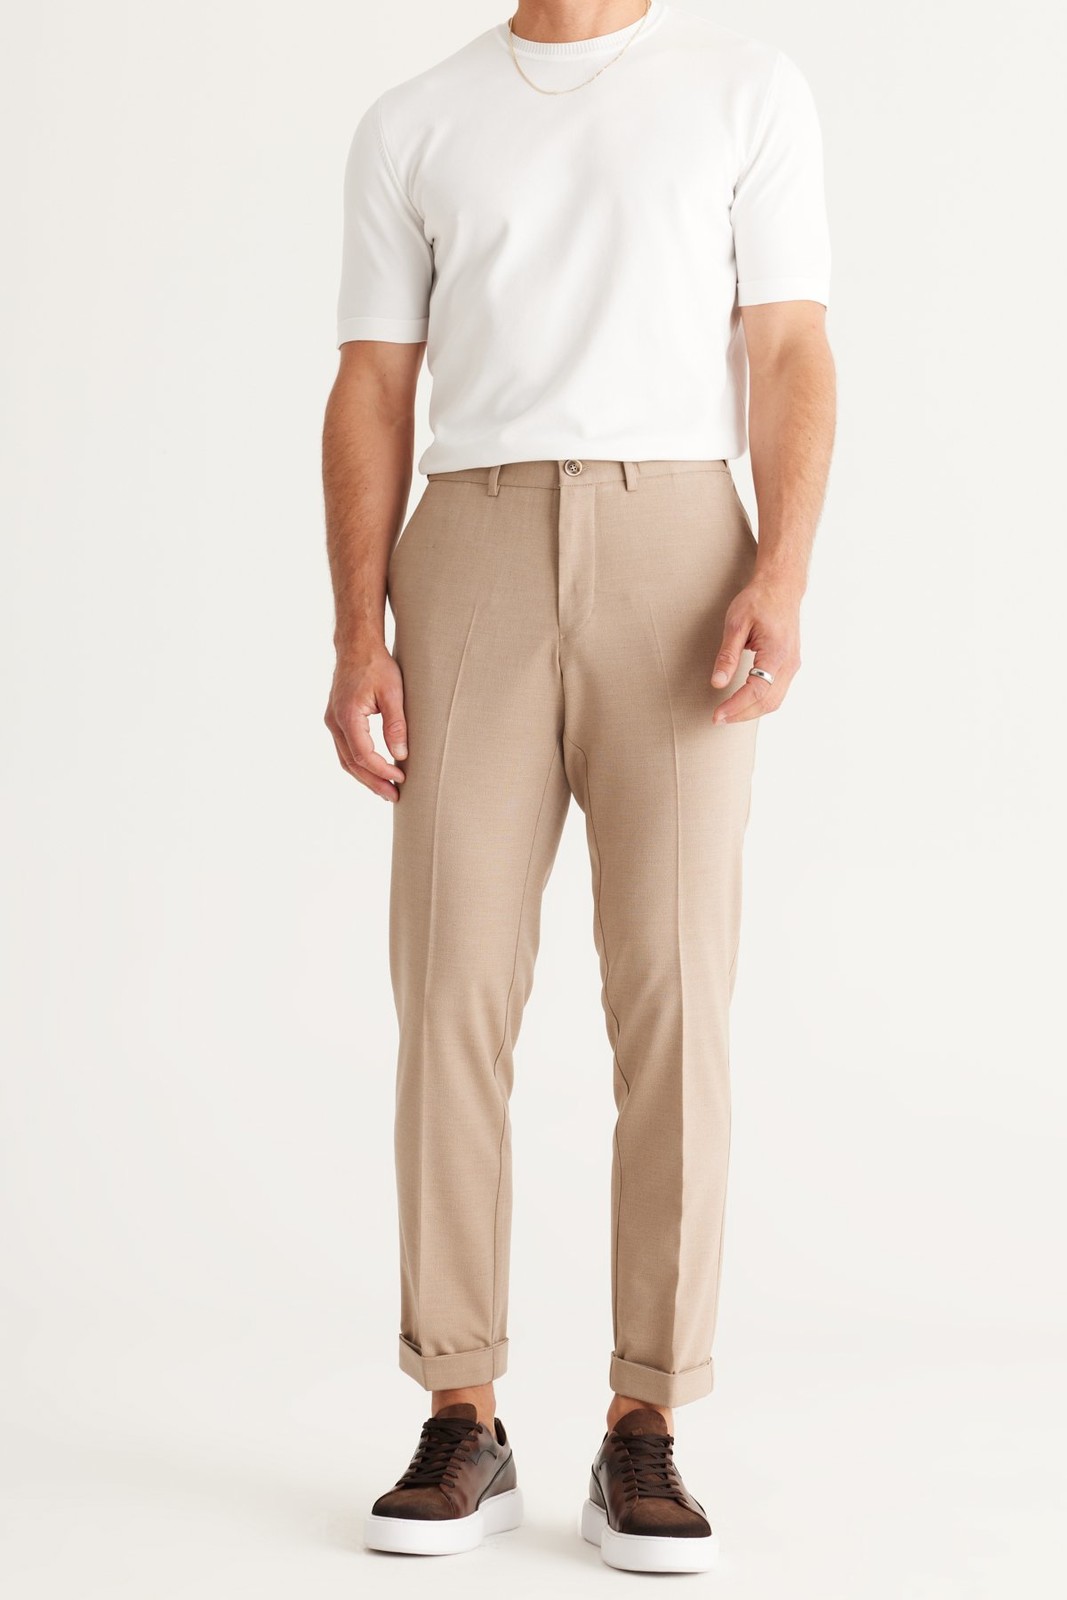 ALTINYILDIZ CLASSICS Men's Beige Slim Fit Slim Fit Elastic Waist Flexible Classic Fabric Trousers